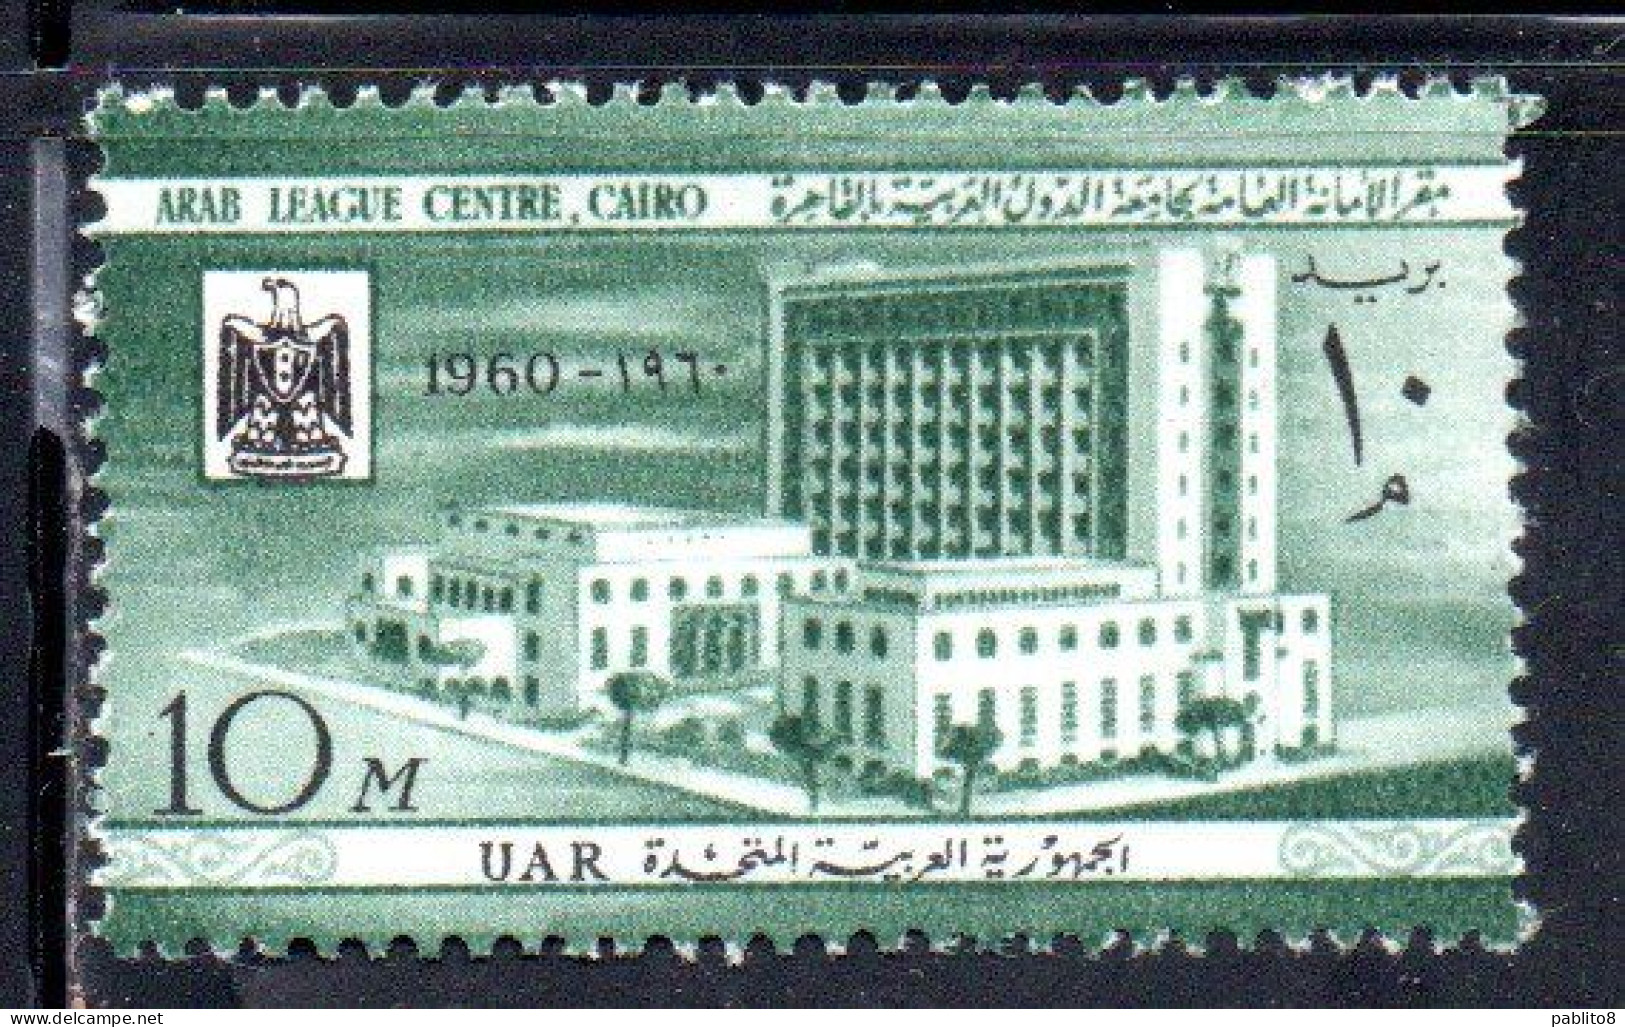 UAR EGYPT EGITTO 1960 OPEN ARAB LEAGUE CENTER AND POSTAL MUSEUM CAIRO 10m MNH - Neufs